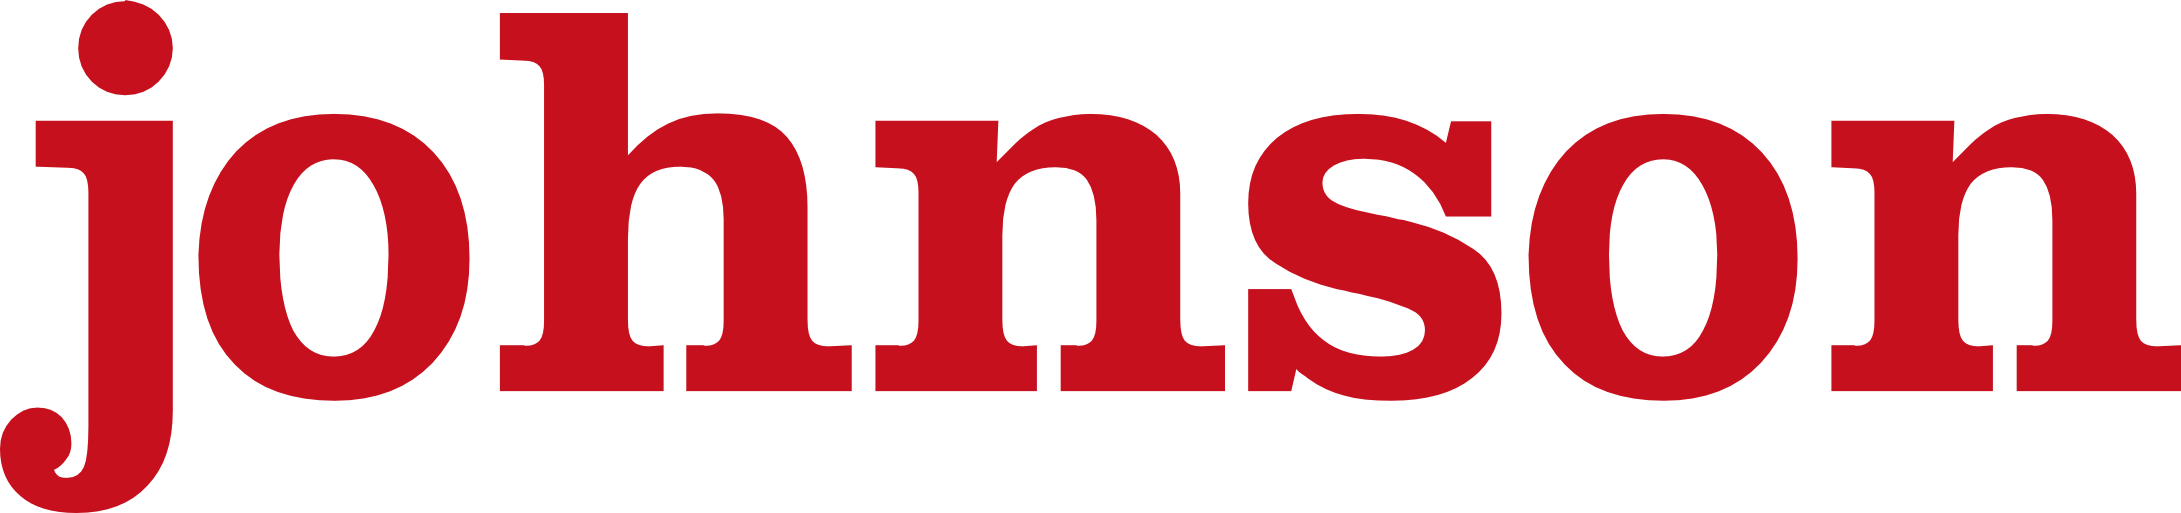 Logotipo de Johnson